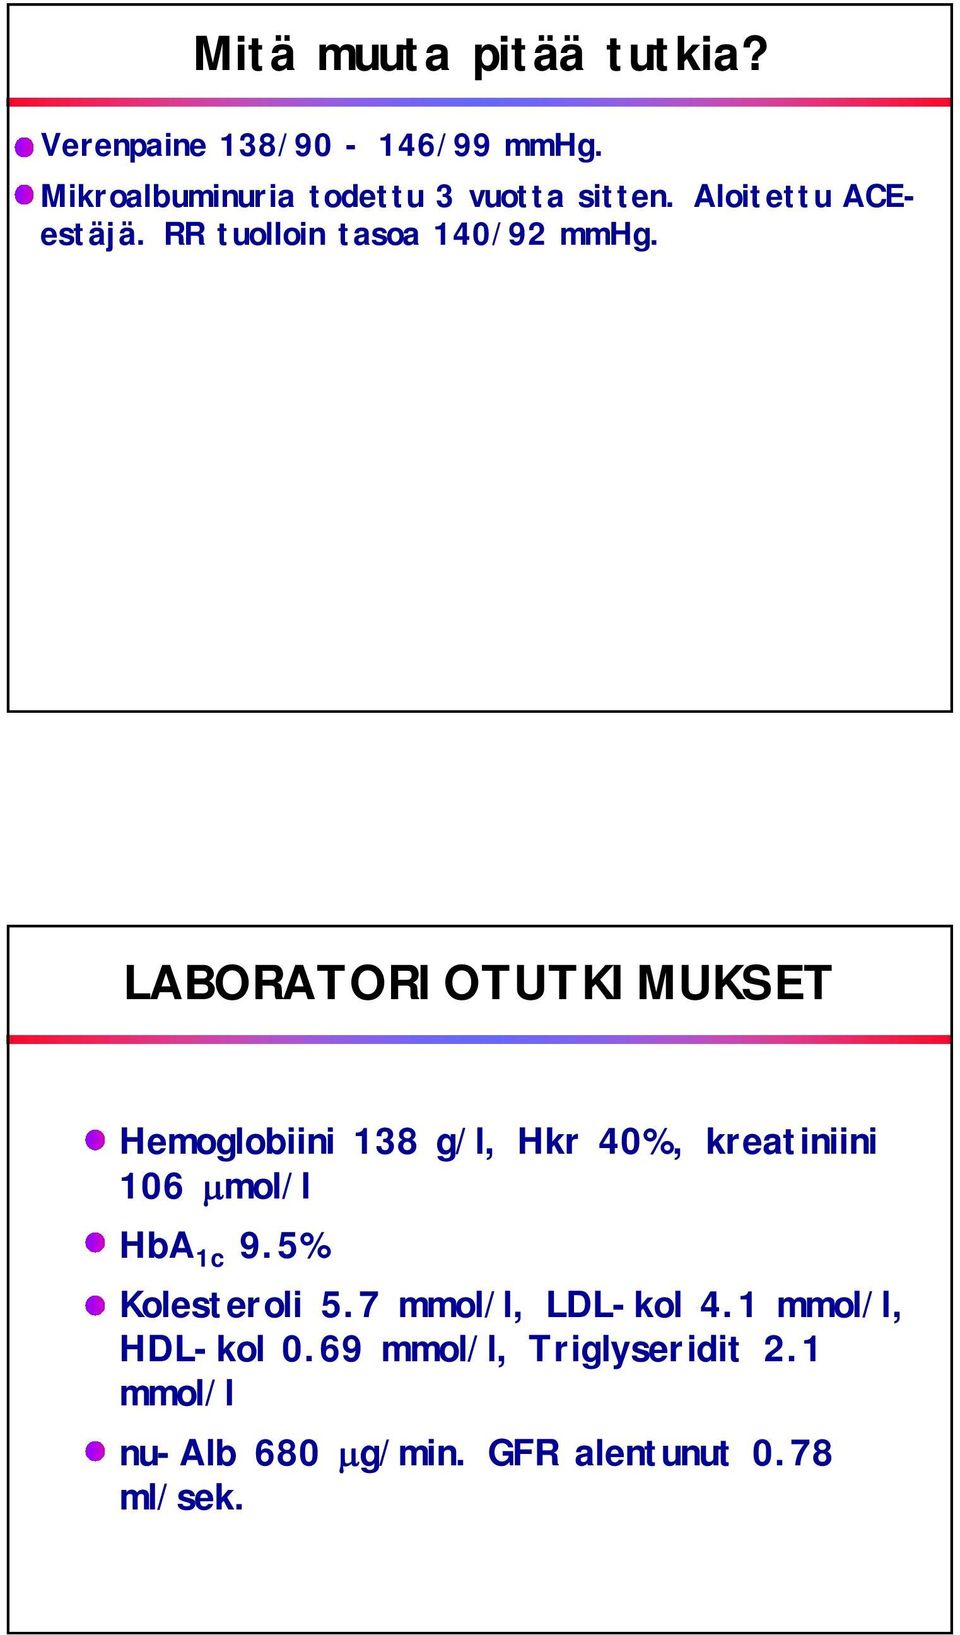 LABORATORIOTUTKIMUKSET Hemoglobiini 138 g/l, Hkr 40%, kreatiniini 106 mol/l HbA 1c 9.